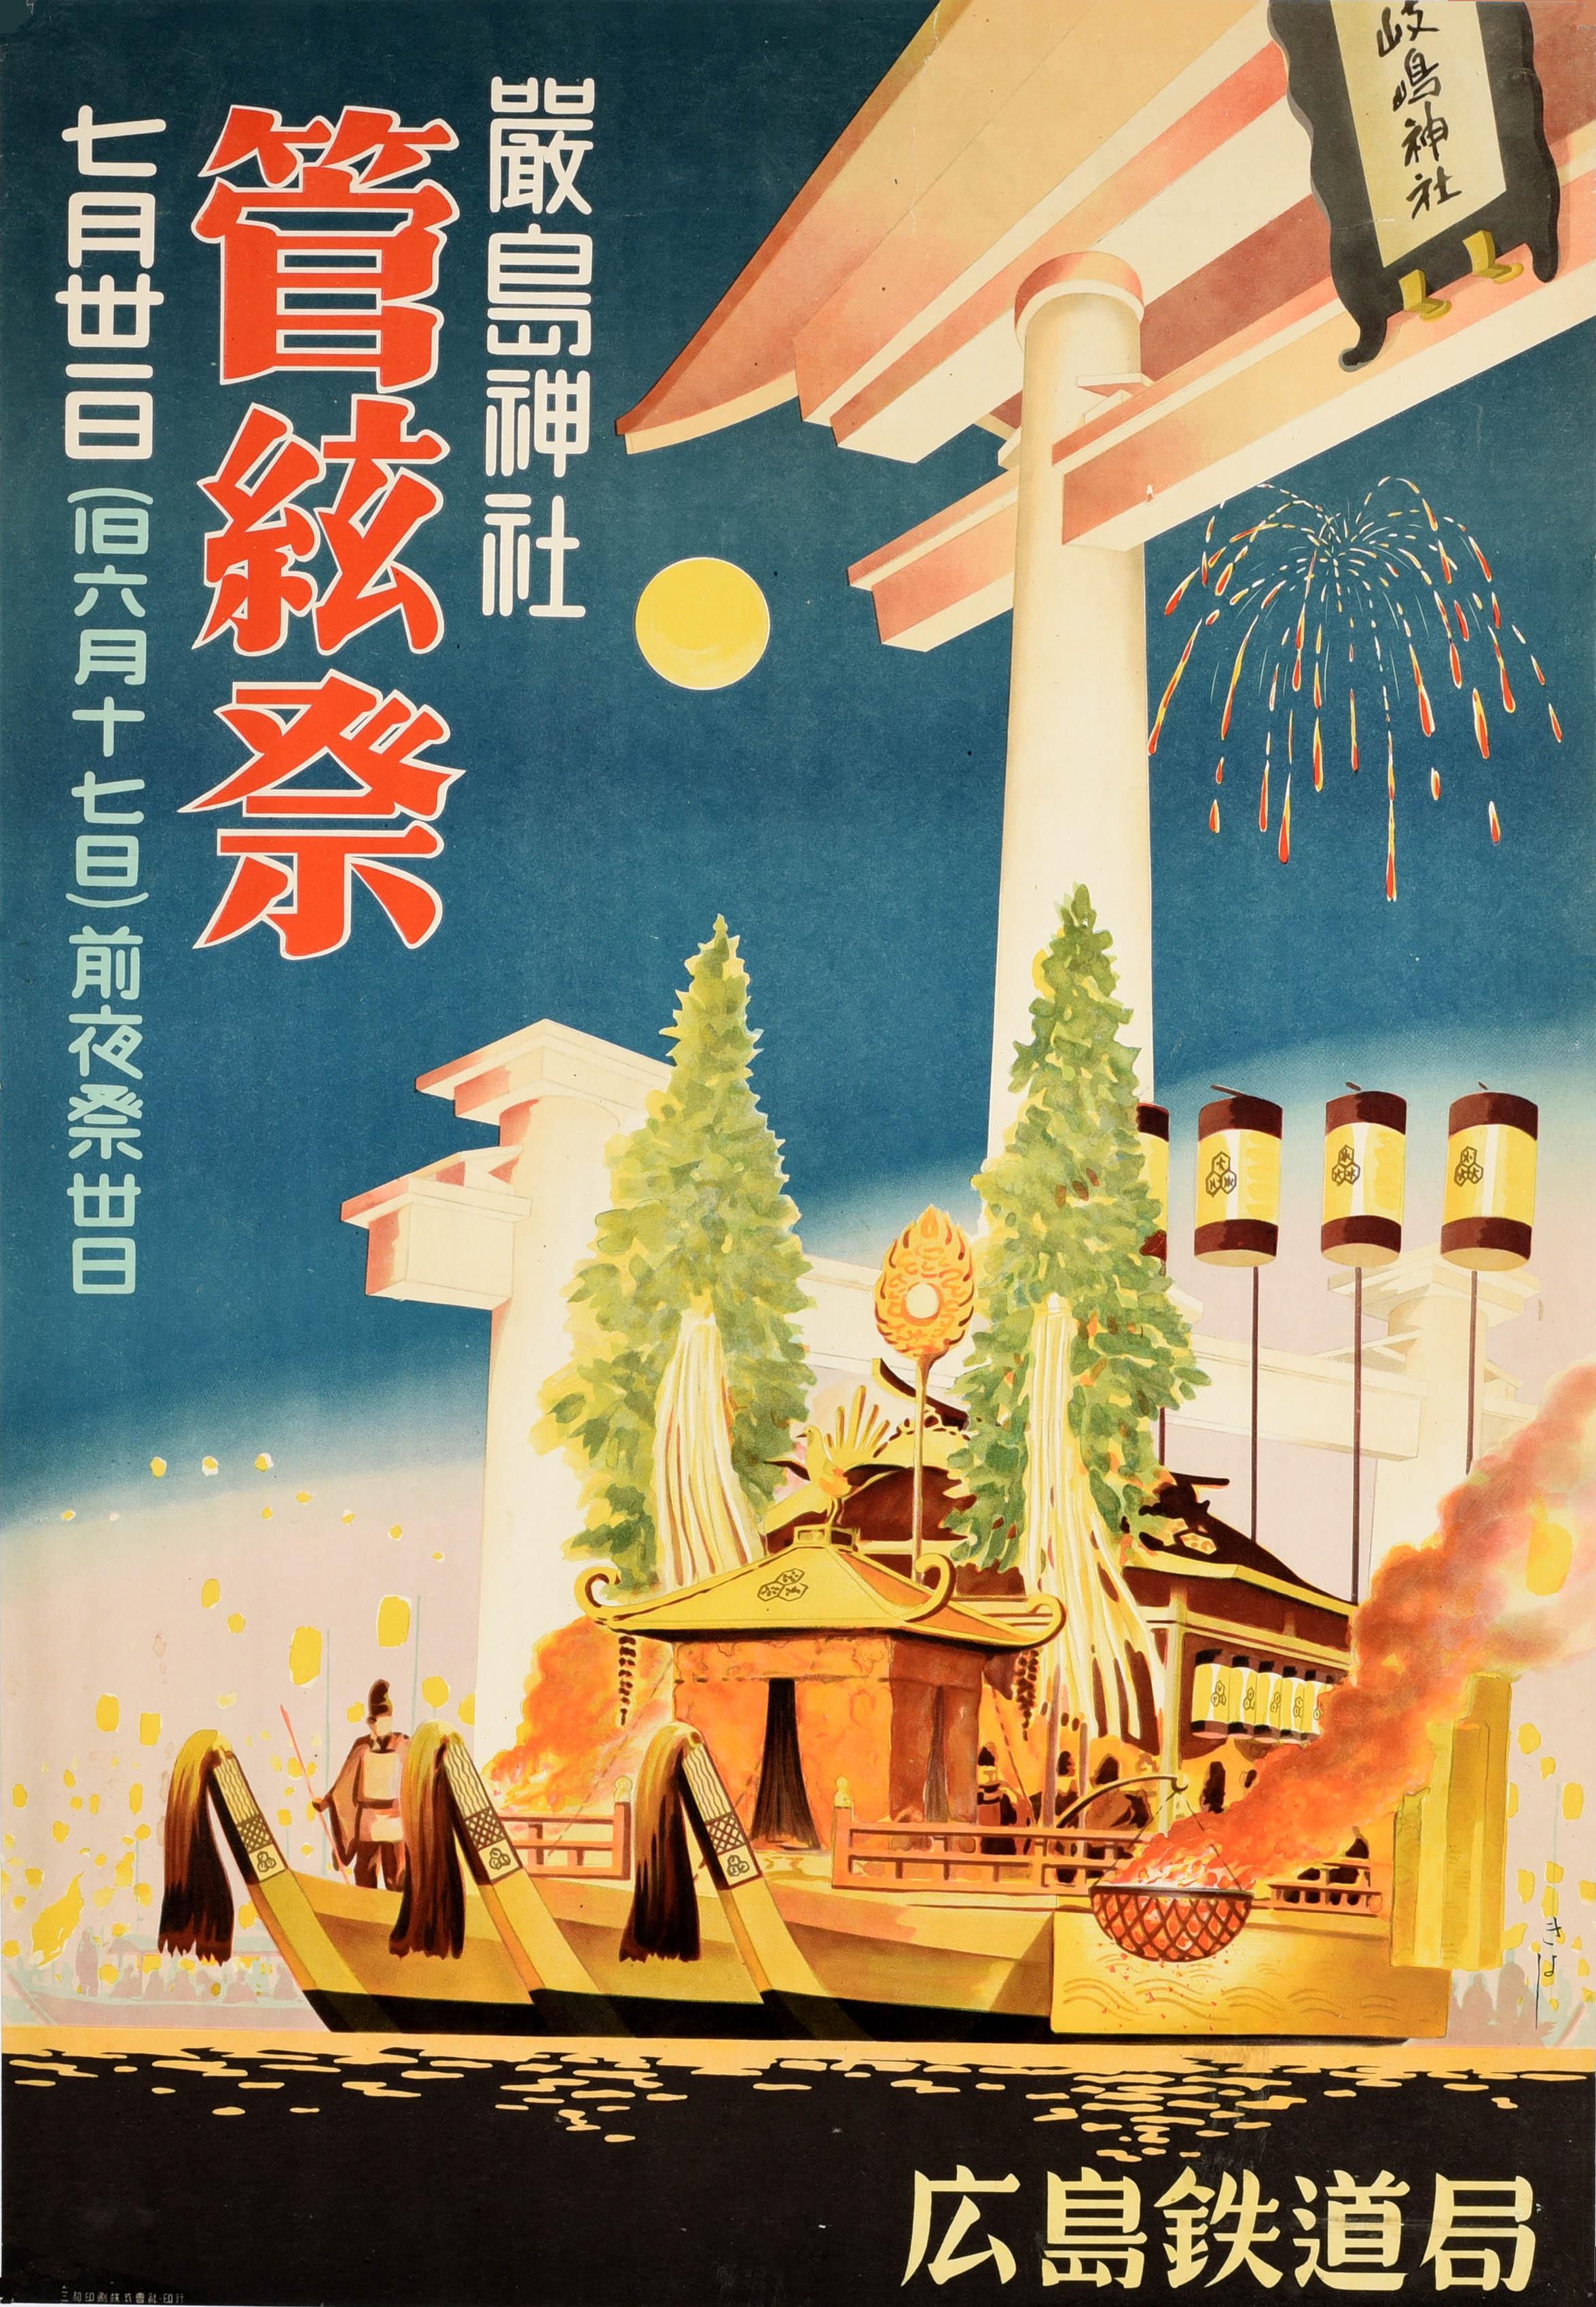 Unknown Print - Original Vintage Railway Travel Poster Shinto Itsukushima Island Japan Festival